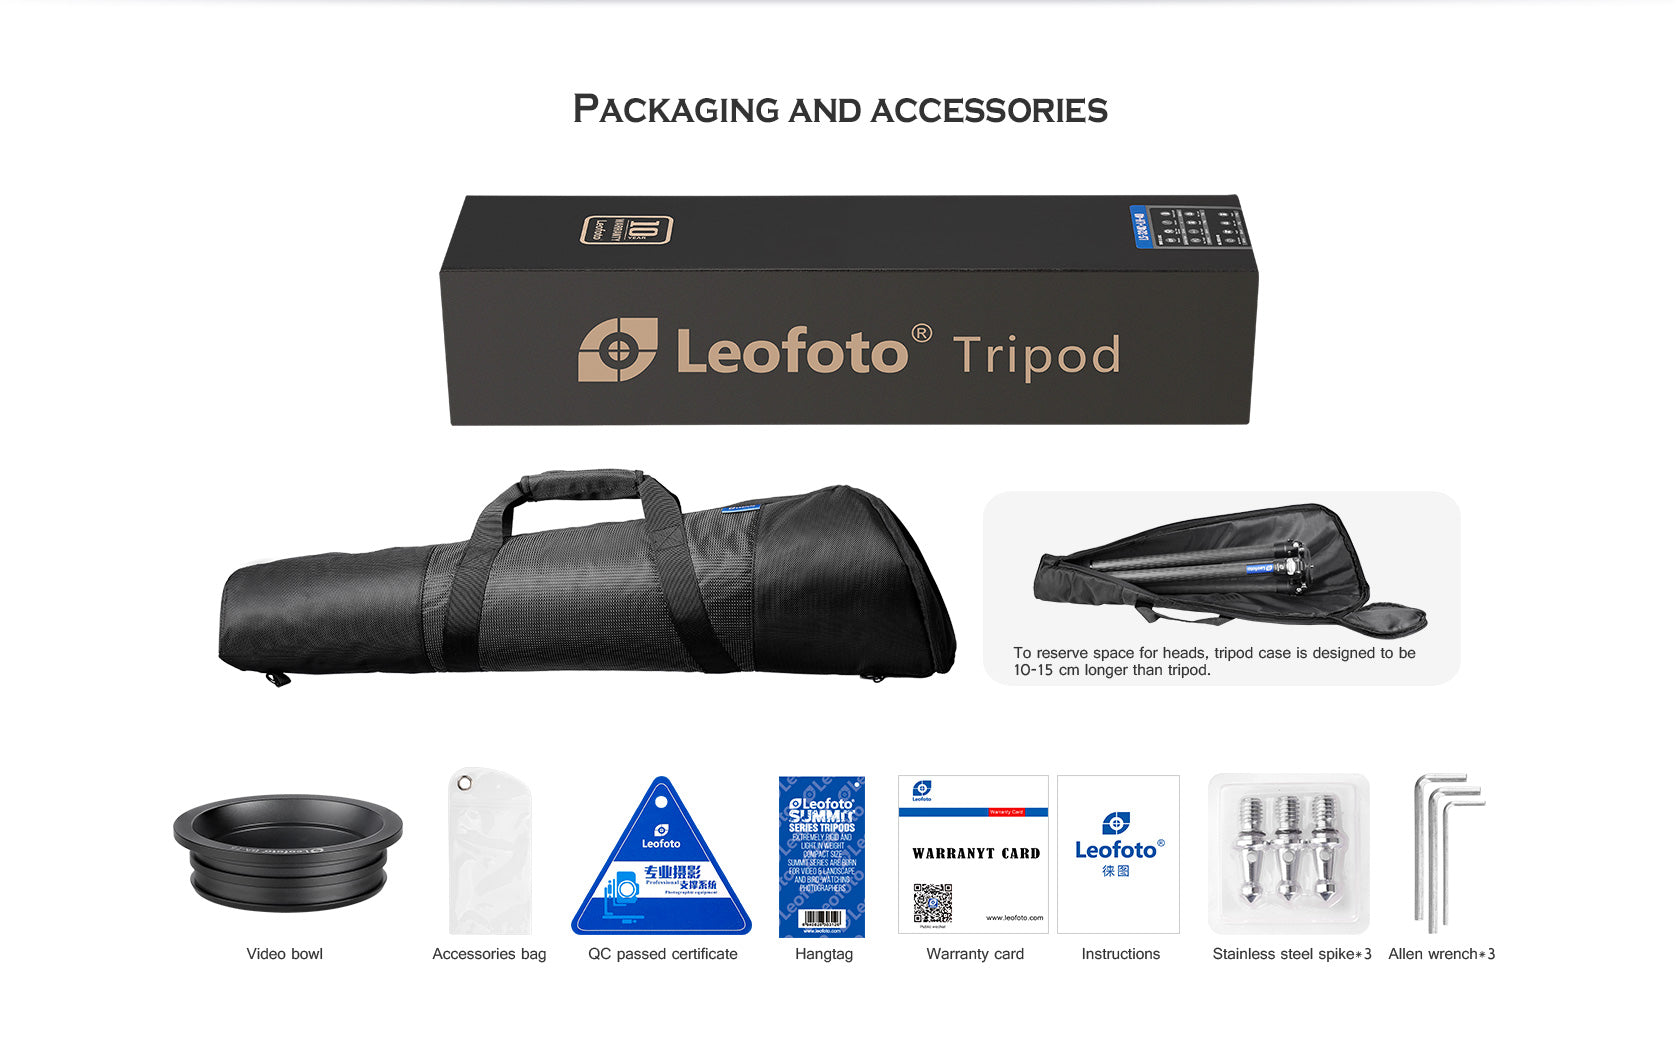 Leofoto LM-405C Tripod with 100mm Video Bowl+Platform and Bag | Max Load 66 lb